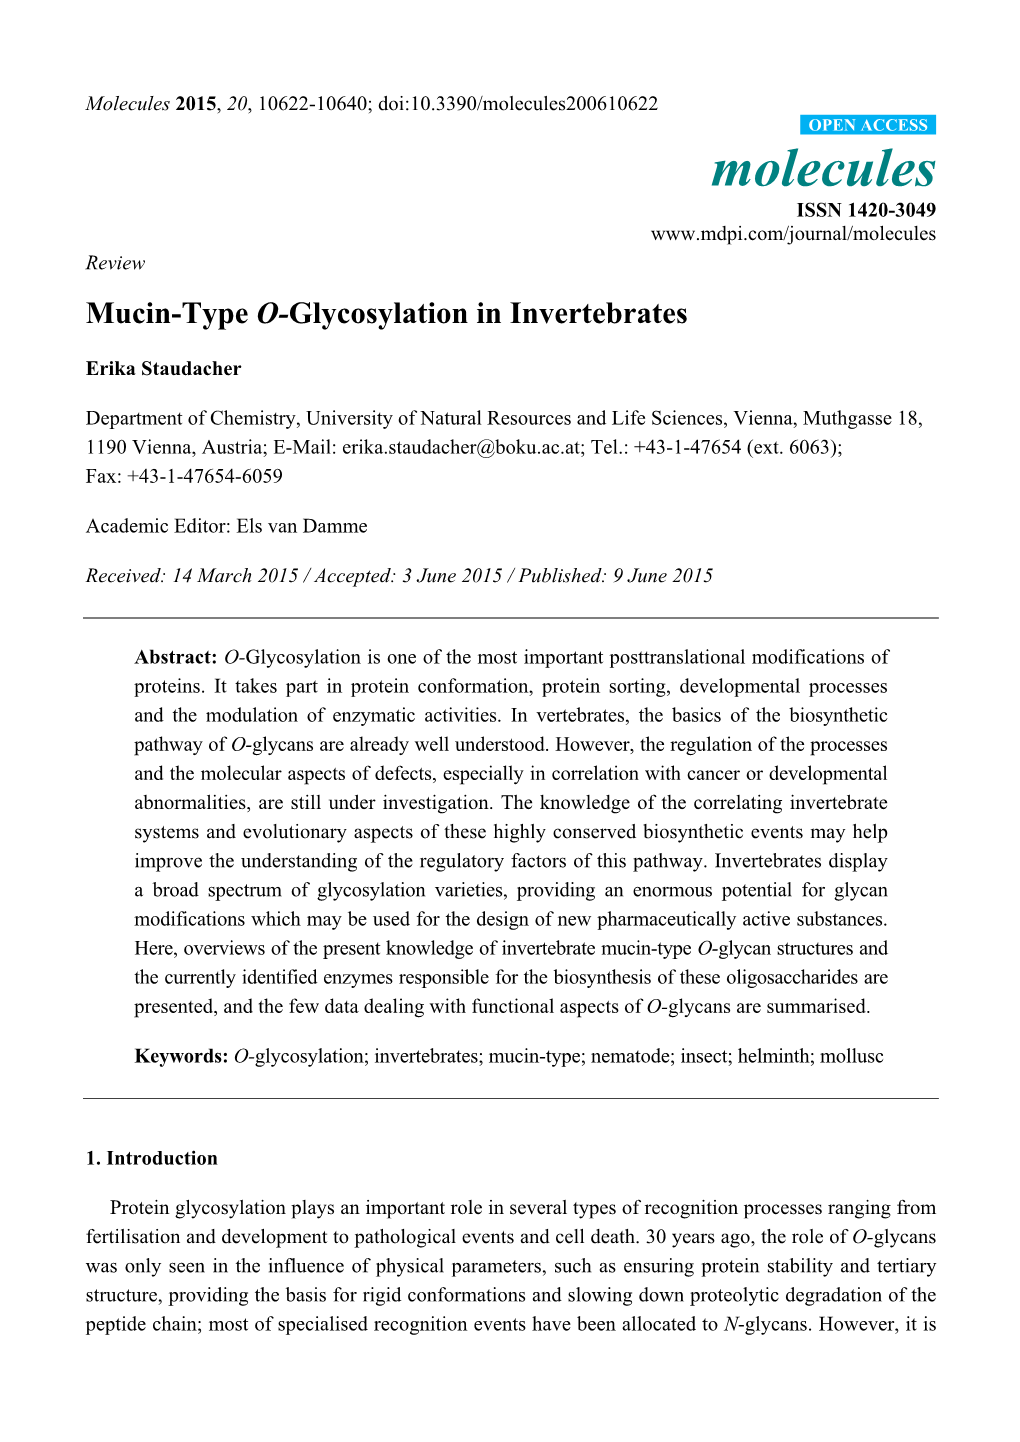 Mucin-Type O-Glycosylation in Invertebrates